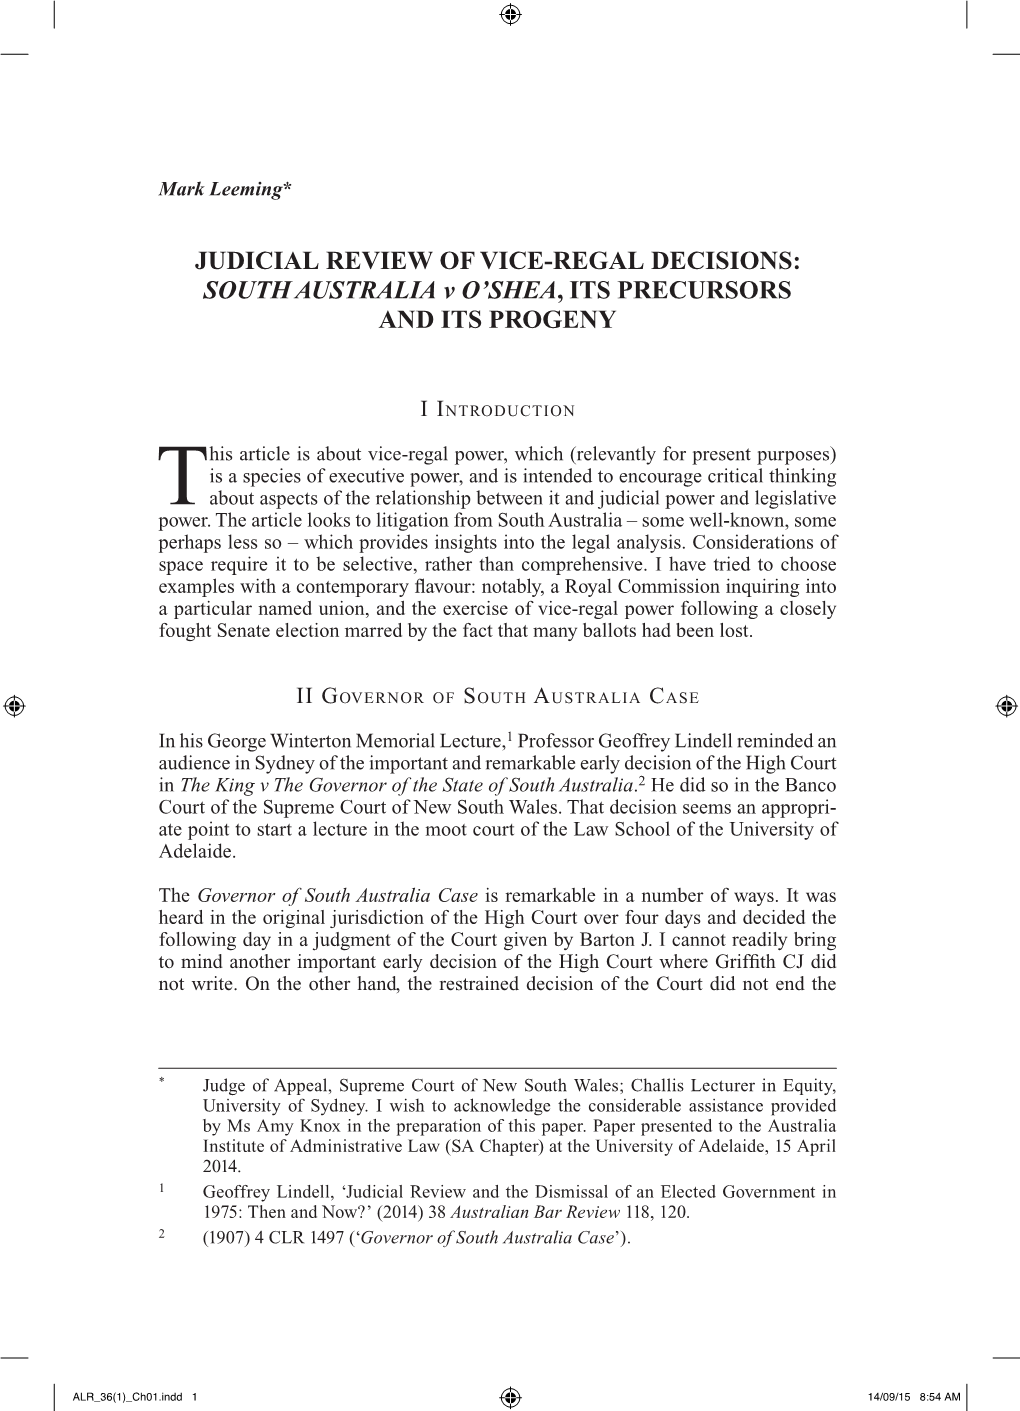 JUDICIAL REVIEW of VICE-REGAL DECISIONS: SOUTH AUSTRALIA V O’SHEA, ITS PRECURSORS and ITS PROGENY